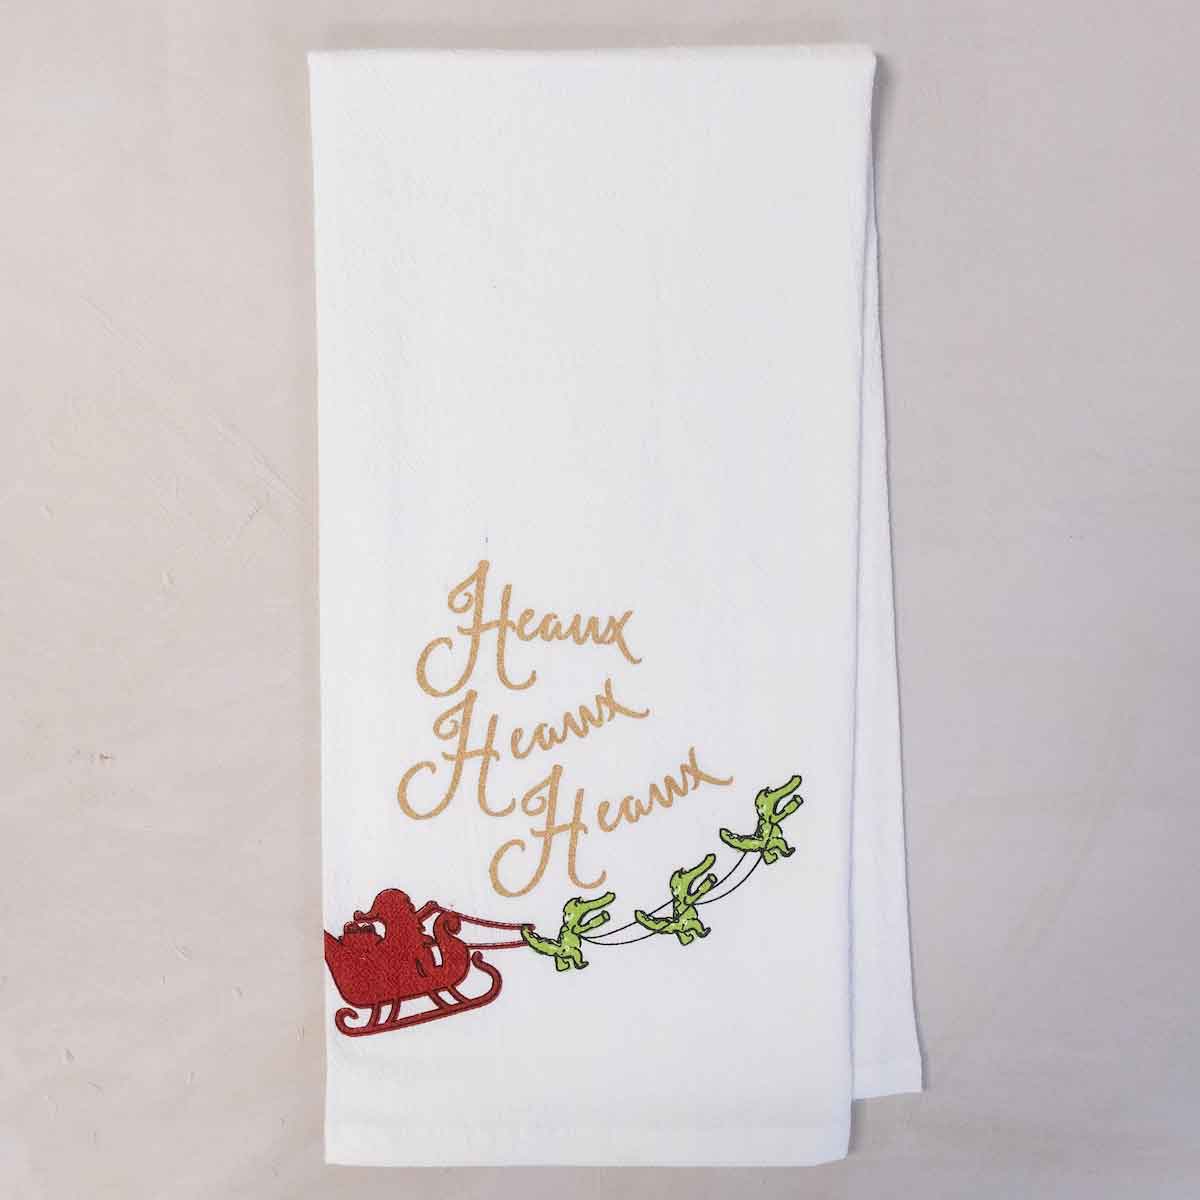 Heaux Gator Flour Sack Hand Towel   White/Multi/Gold   20x28